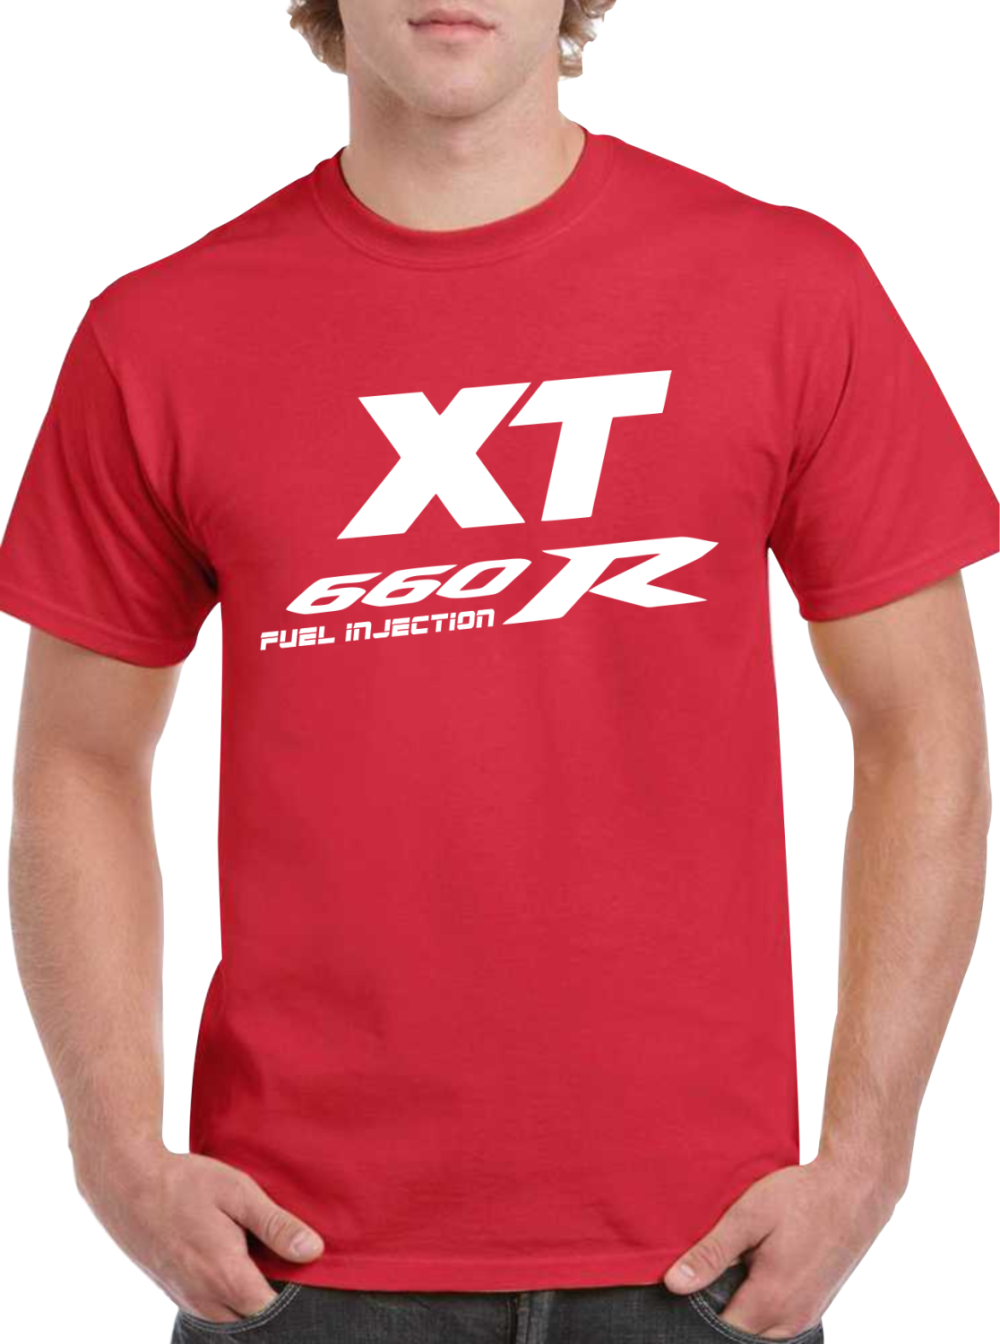 camiseta xt660r